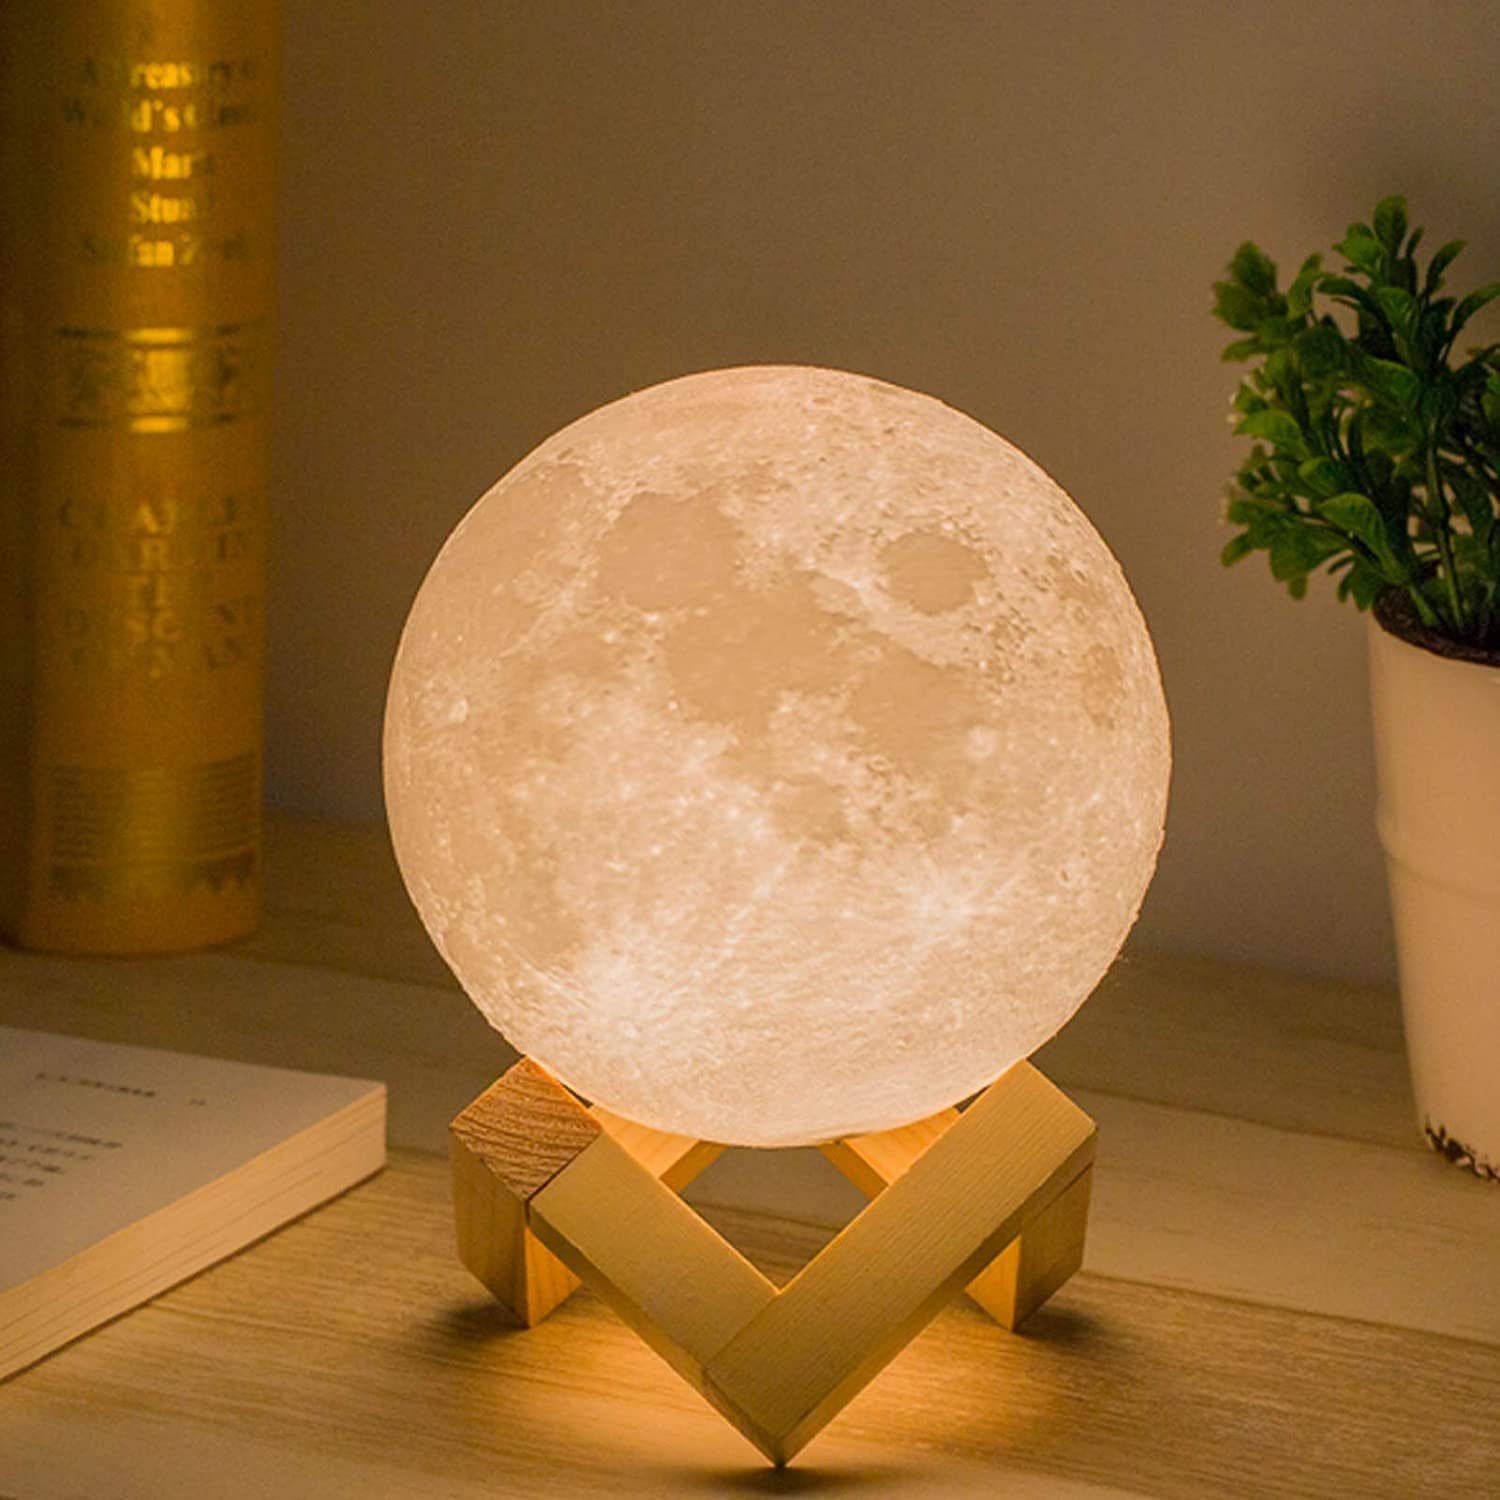 Nachtlicht,3D Lampe, Warmes Lampe,Kleines Lampen Dimmbar Mond Lampe,Dekorative Druck Haiaveng Touch Weiß, USB Nachtlicht Mond Lade